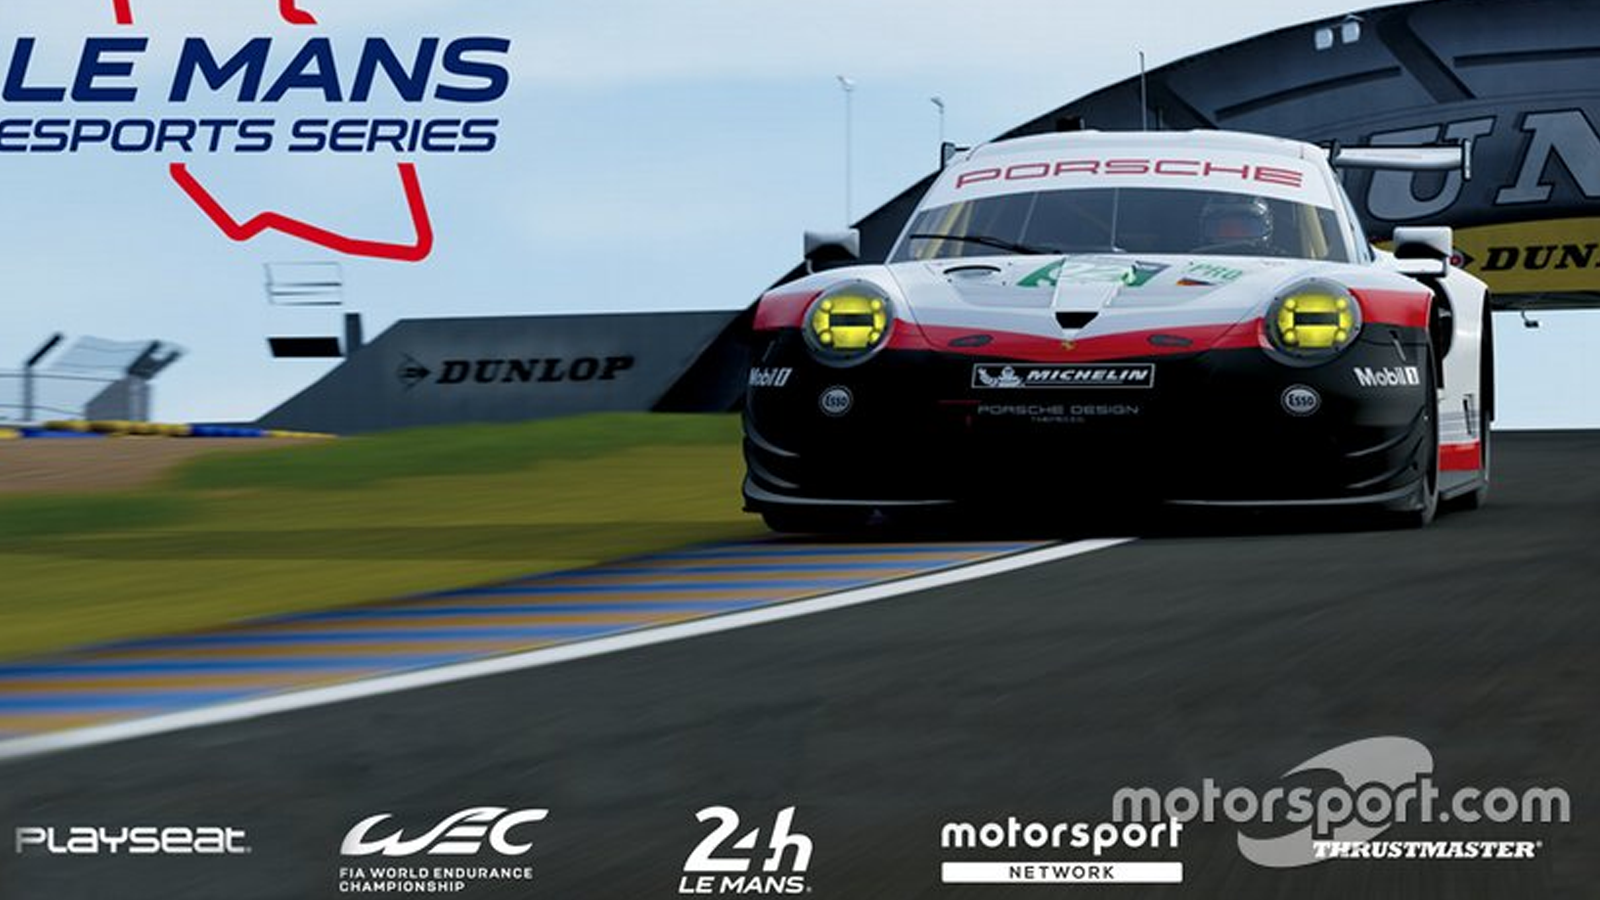 Le Mans esports series